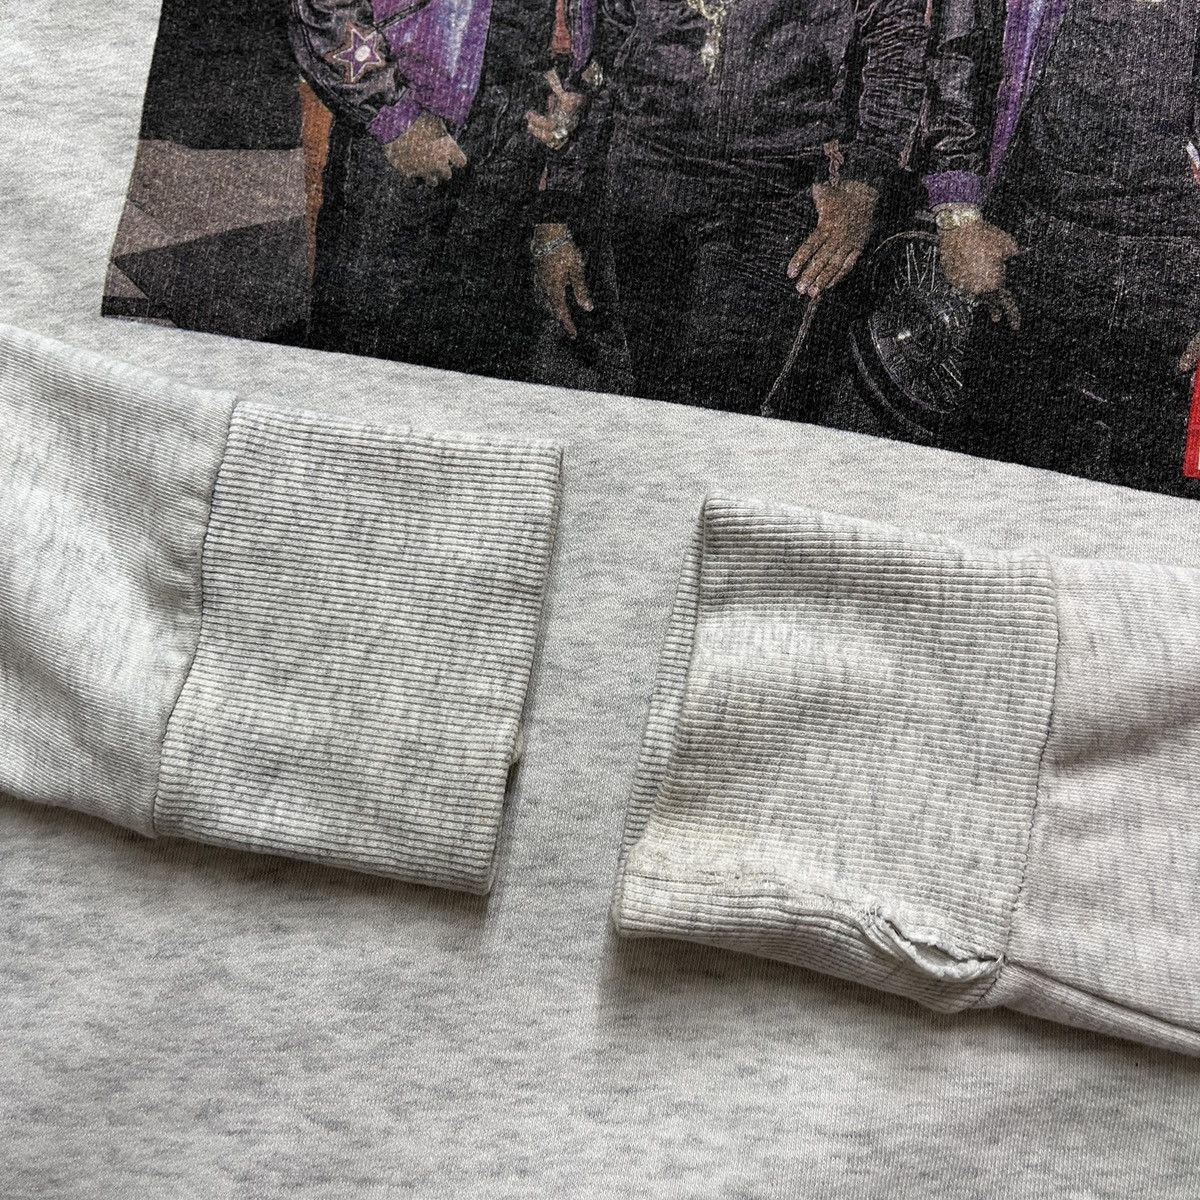 Band Tees - Rare Design RUN DMC Sweatshirts Life - 8